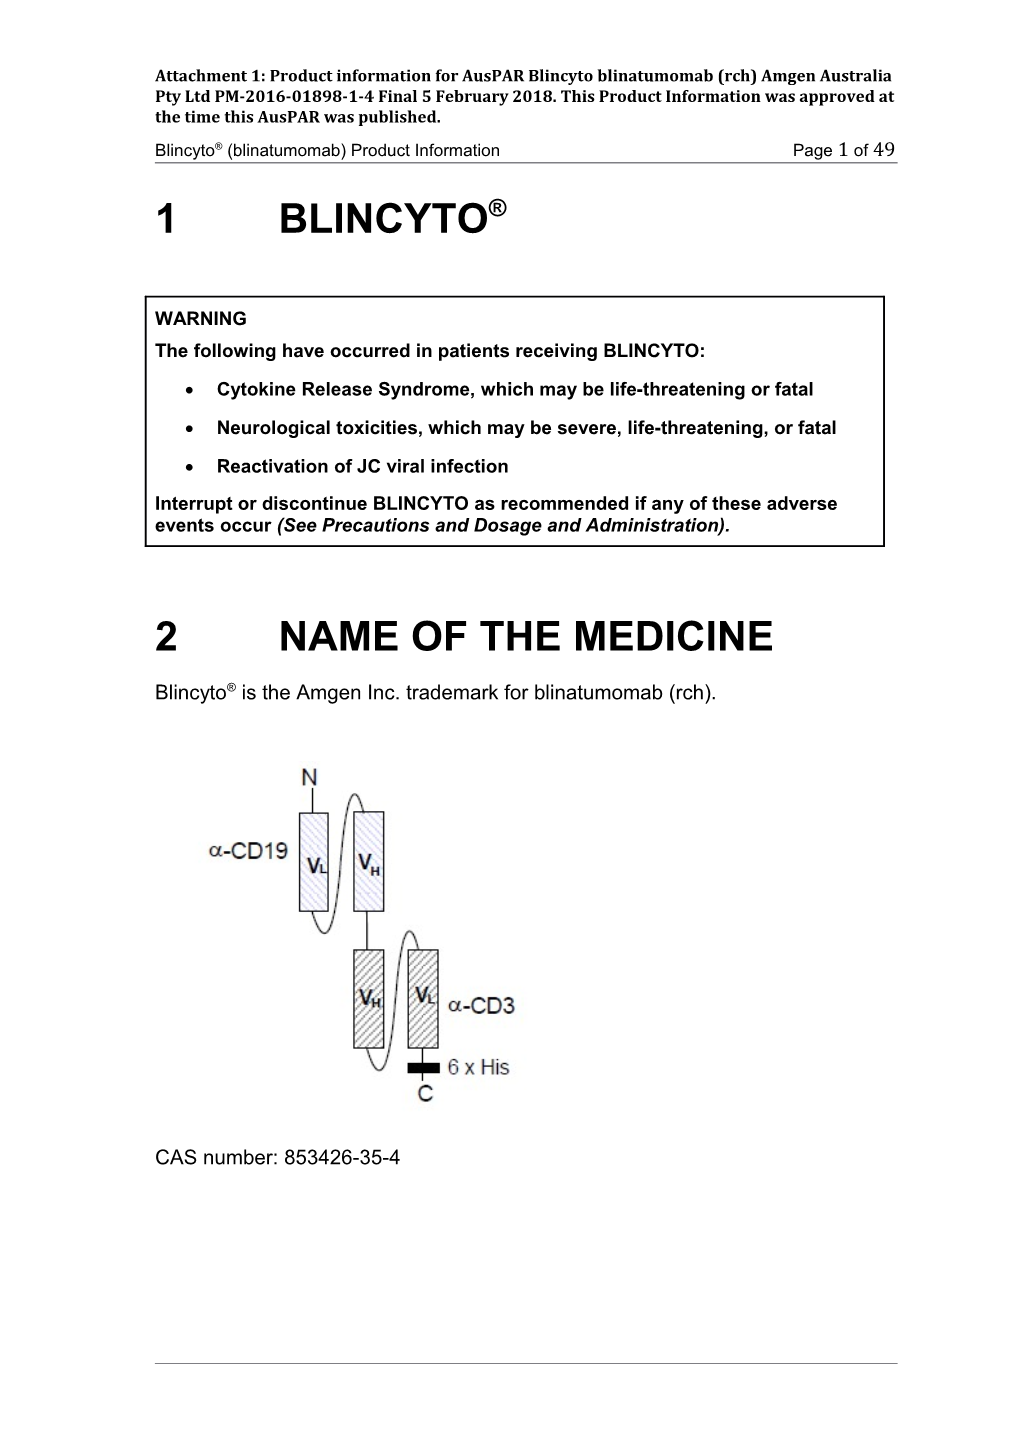 Auspar Attachment 1: Product Information for Blinatumomab (Rch)